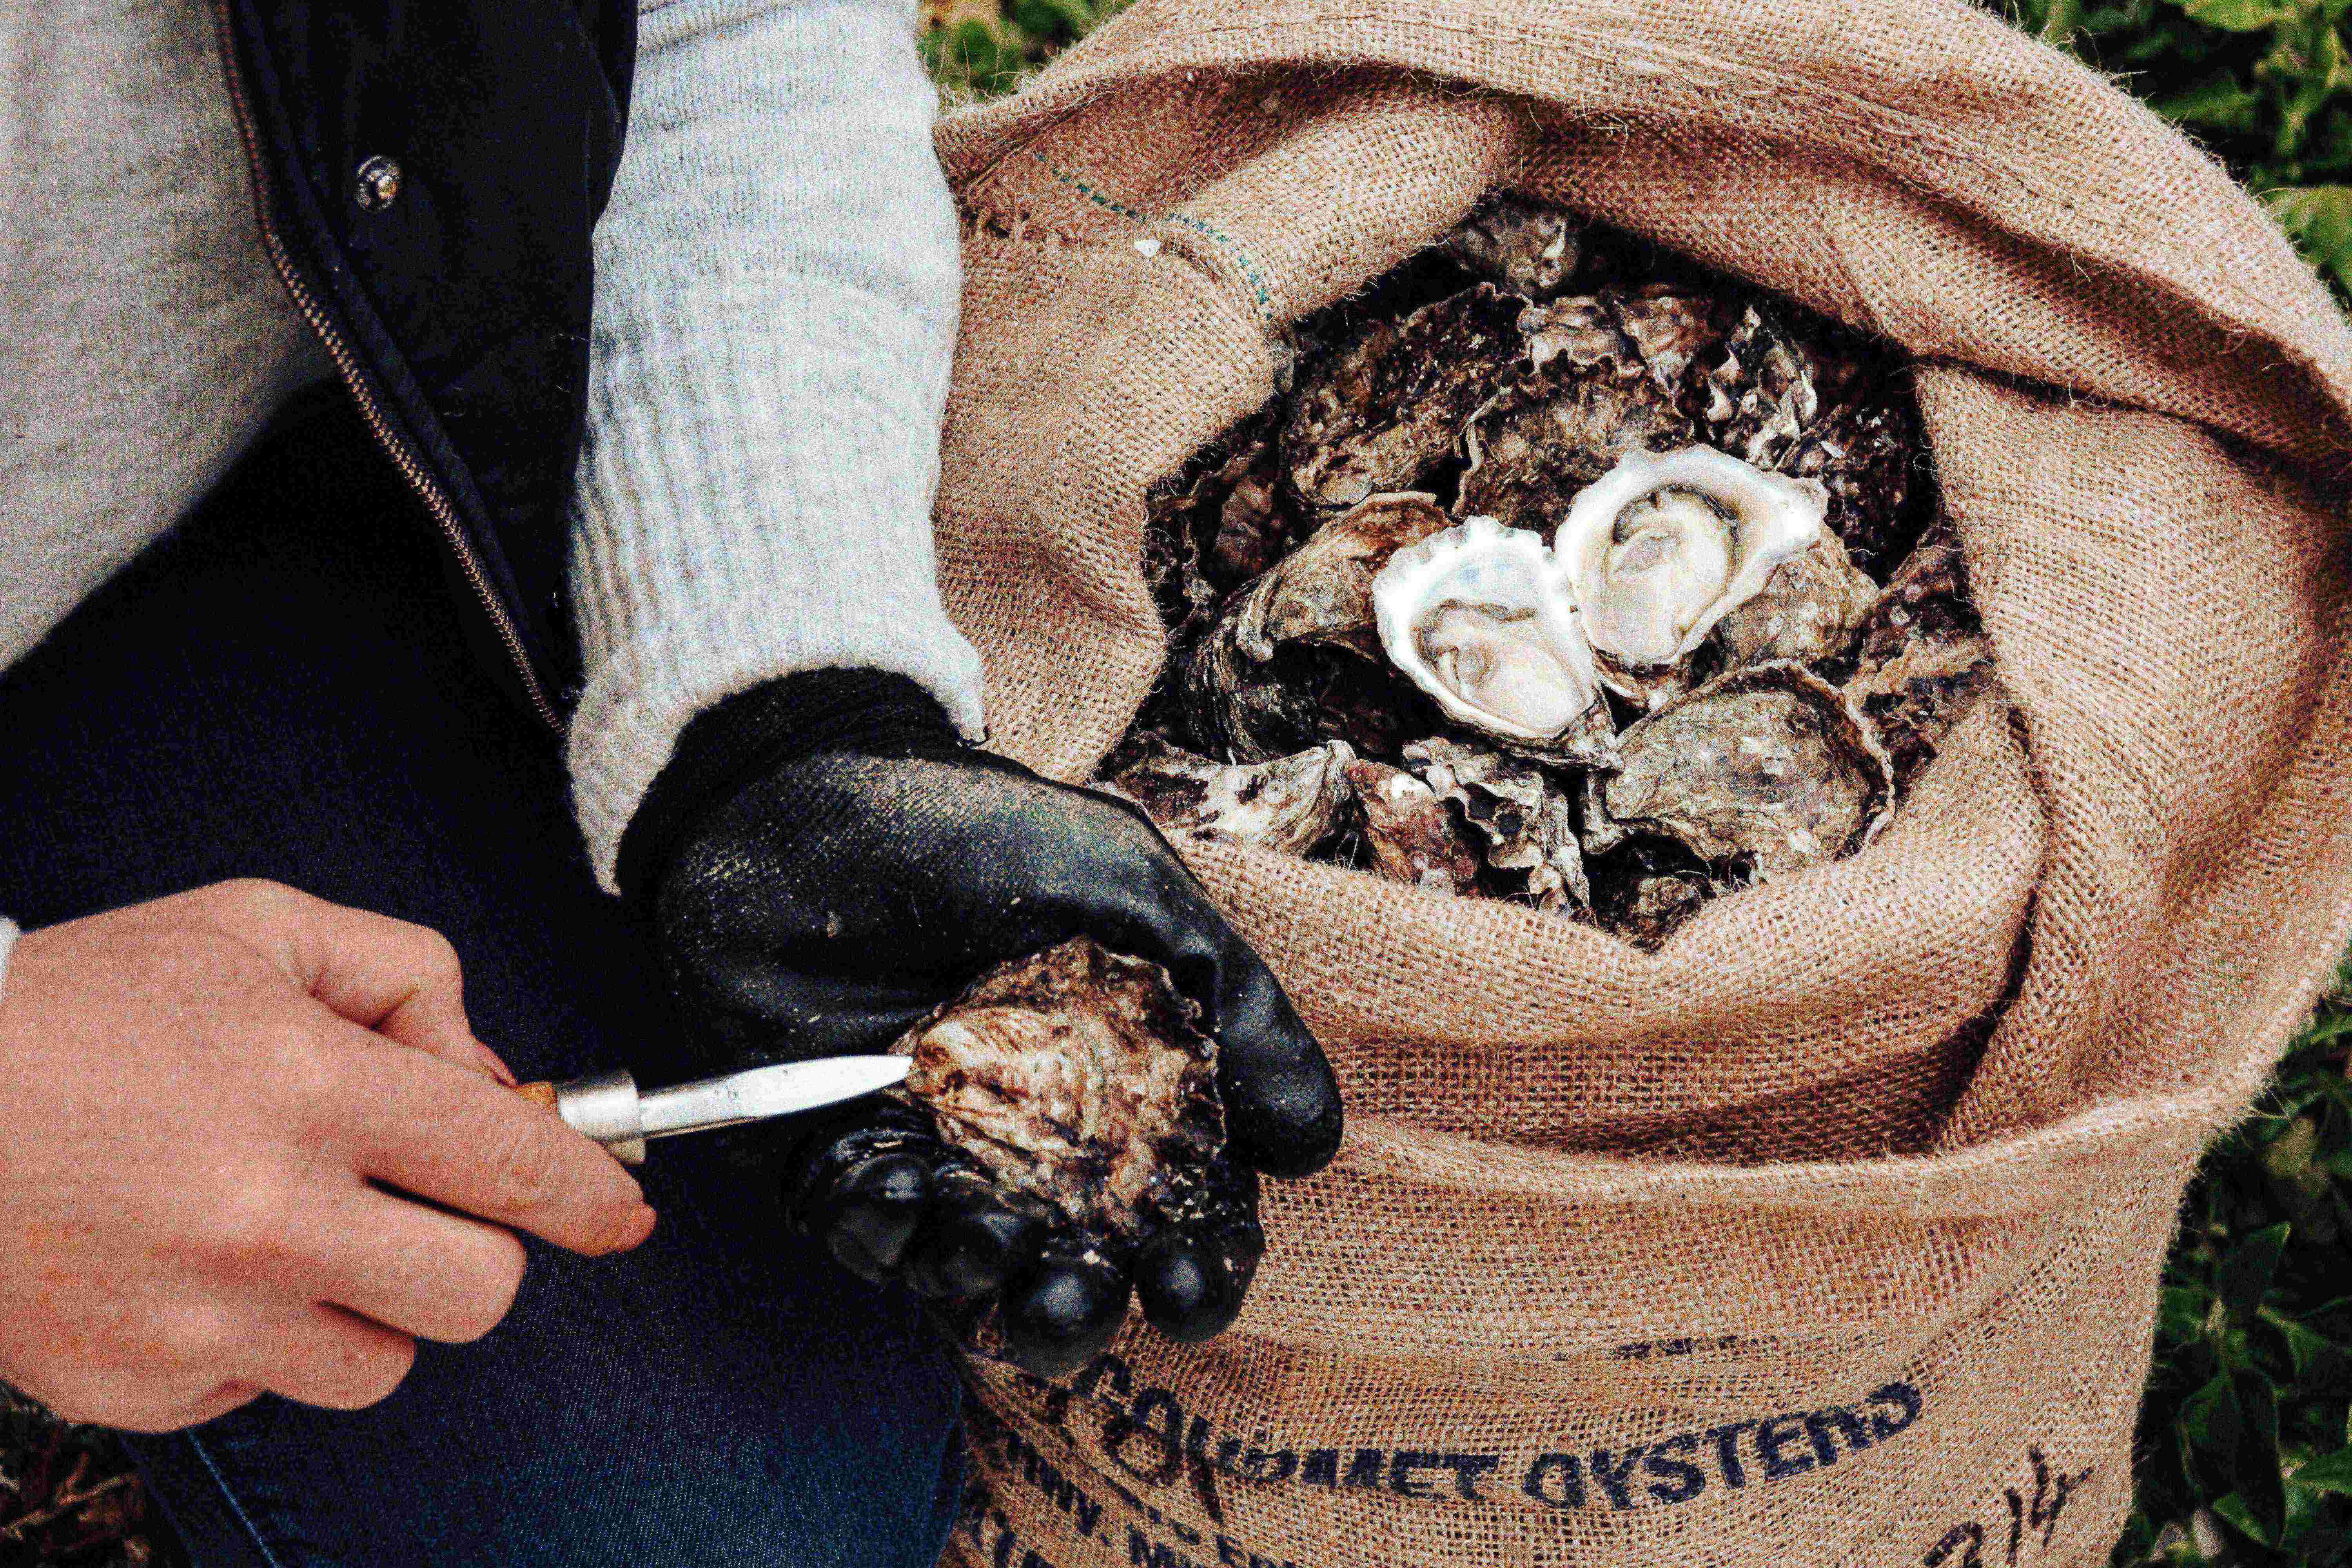 Oysters off the Easter menu for many after devastating floods